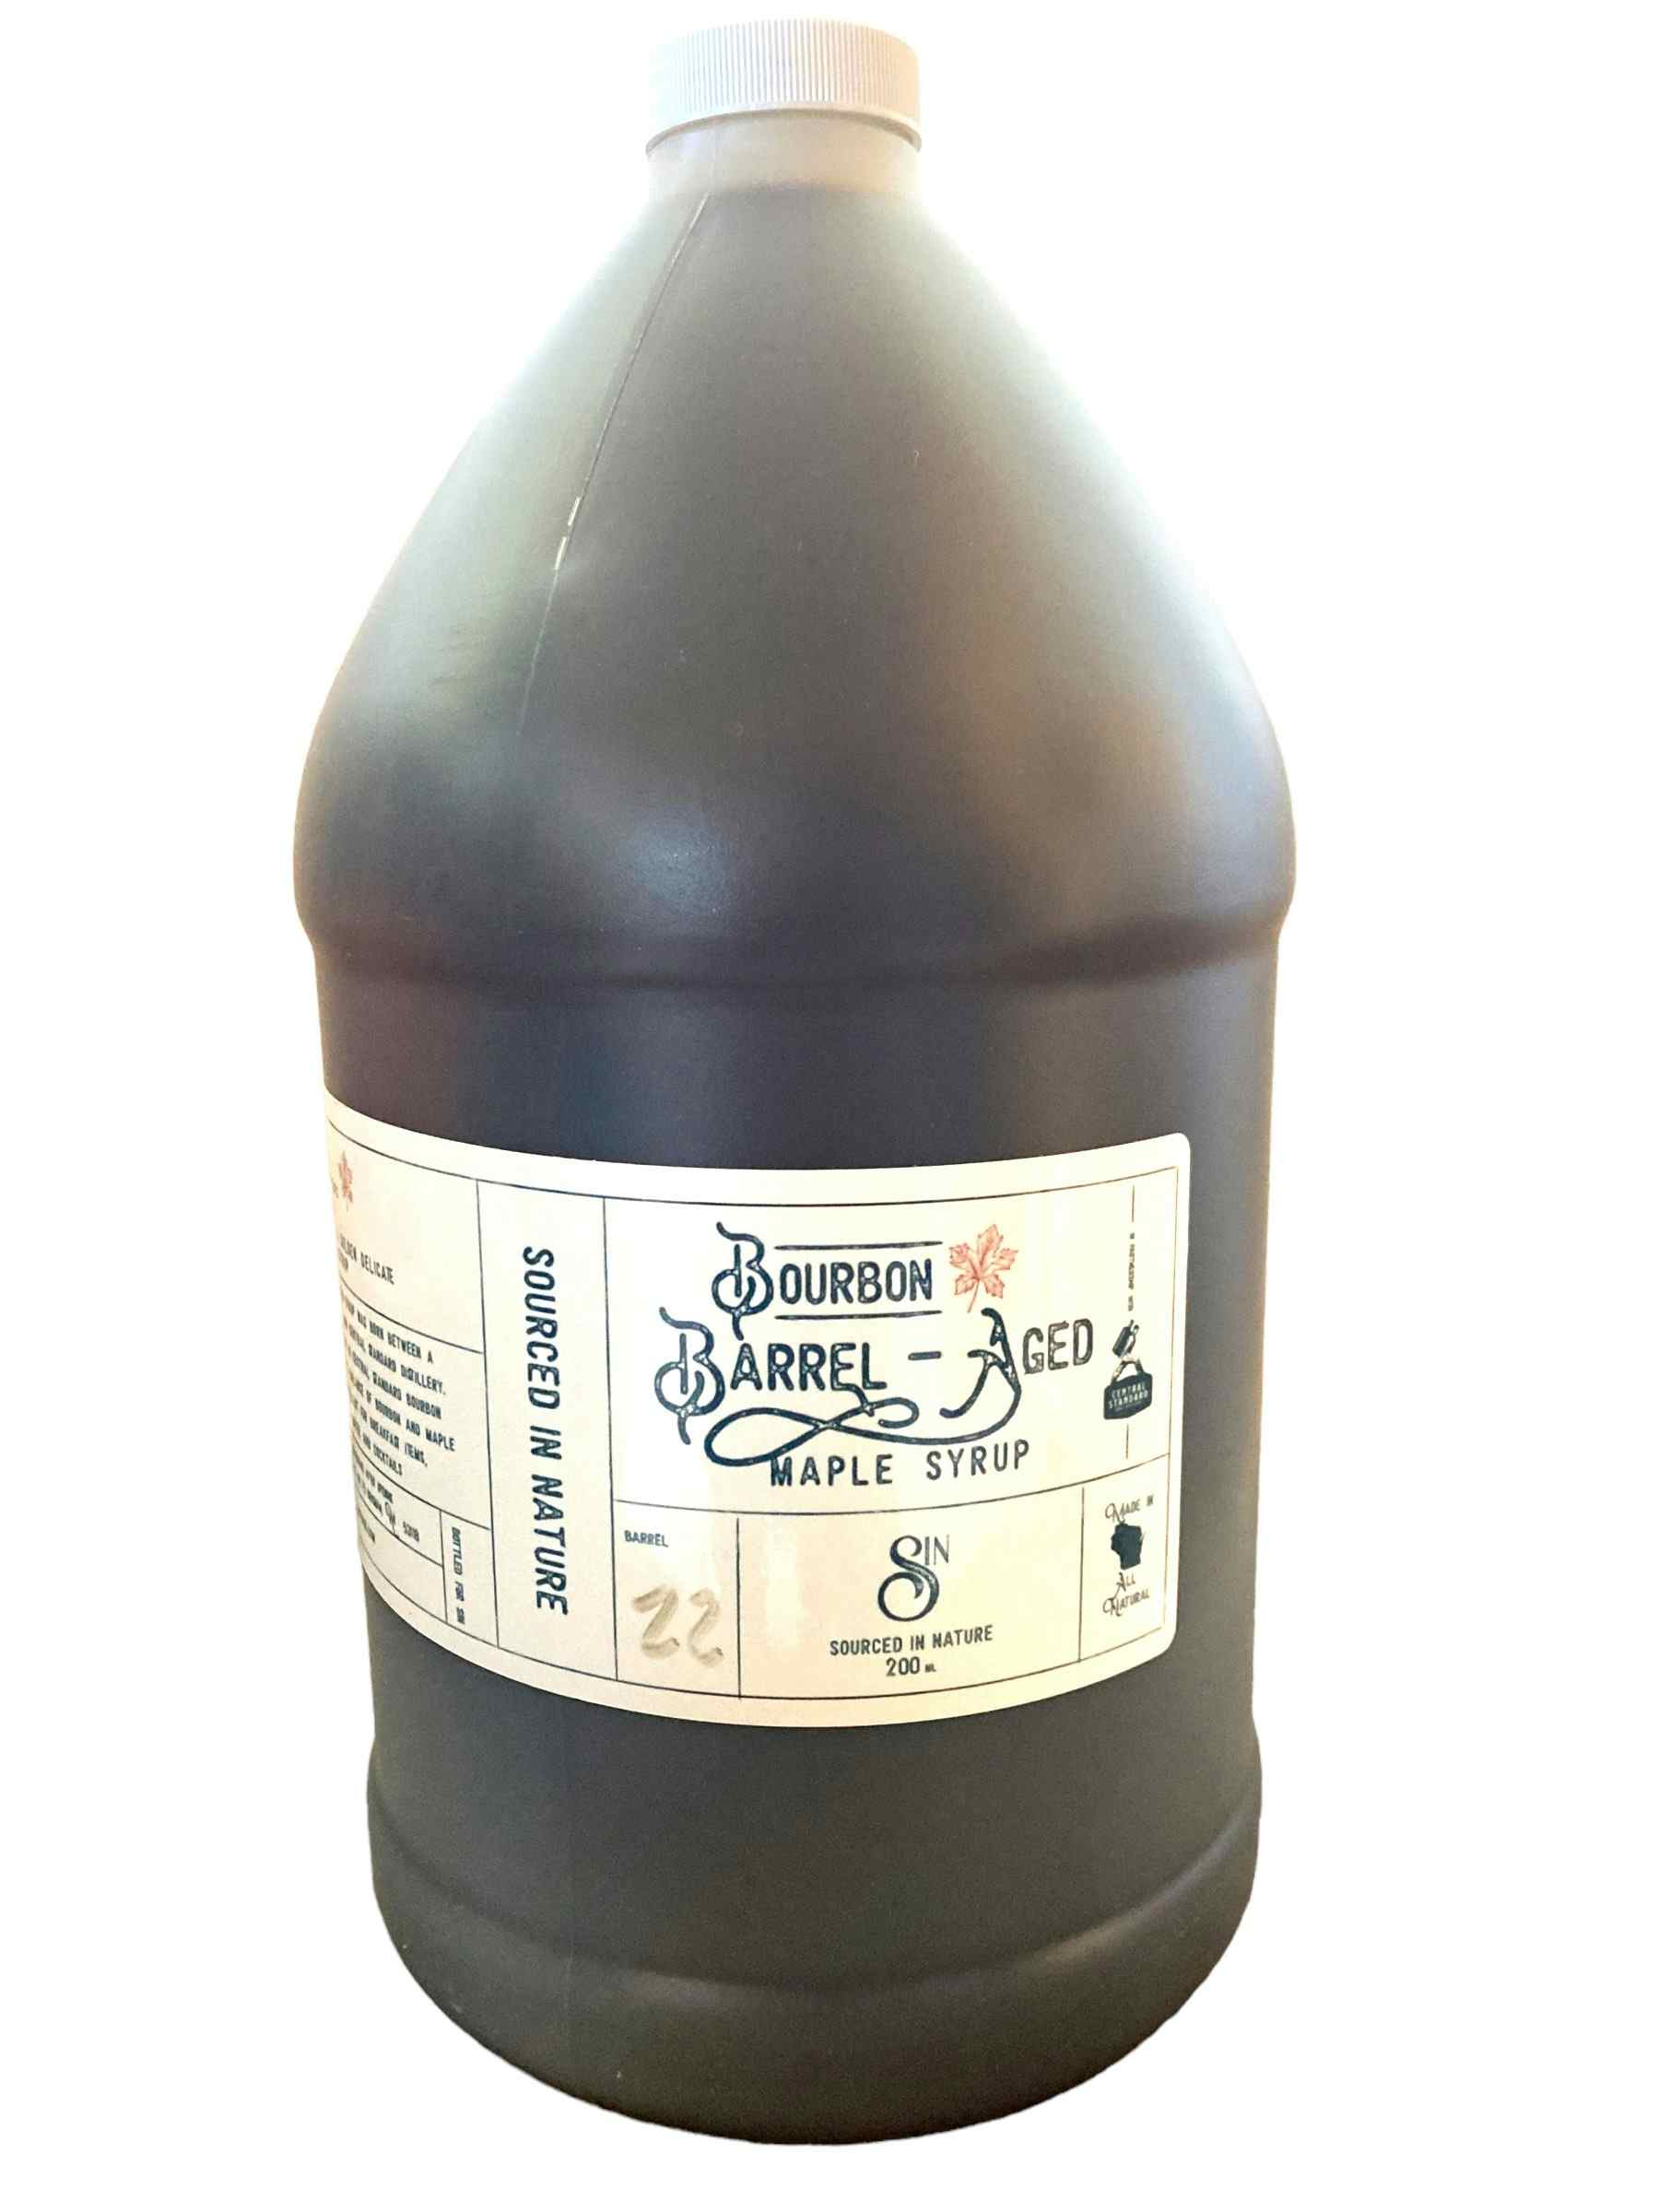 Bourbon Barrel Aged Maple Syrup - 1 gallon